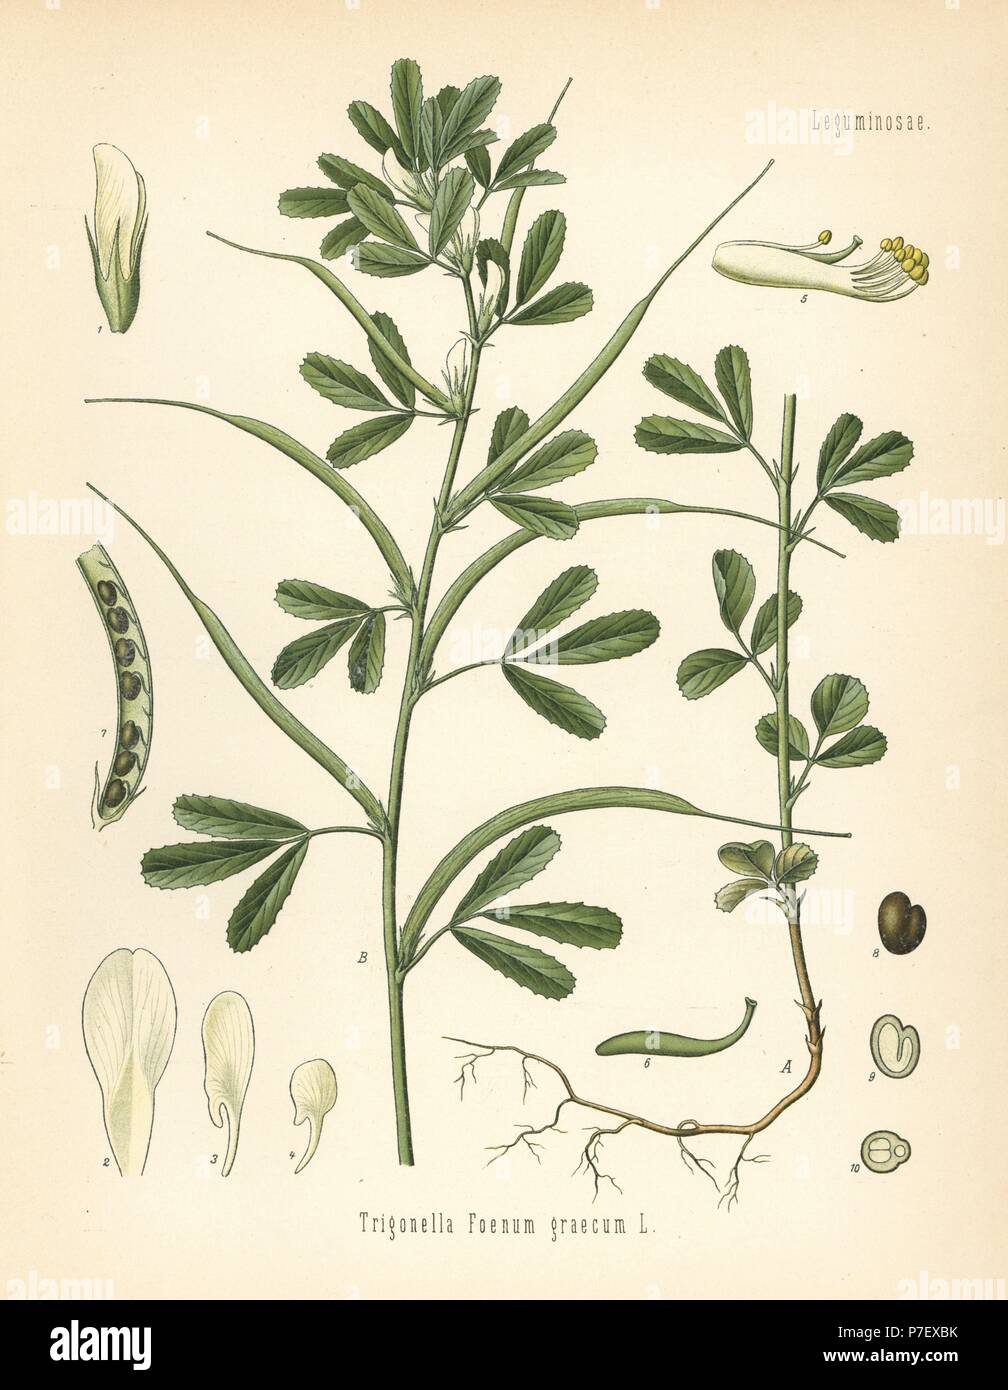 Fenugreek, Trigonella foenum-graecum. Chromolithograph after a botanical illustration from Hermann Adolph Koehler's Medicinal Plants, edited by Gustav Pabst, Koehler, Germany, 1887. Stock Photo